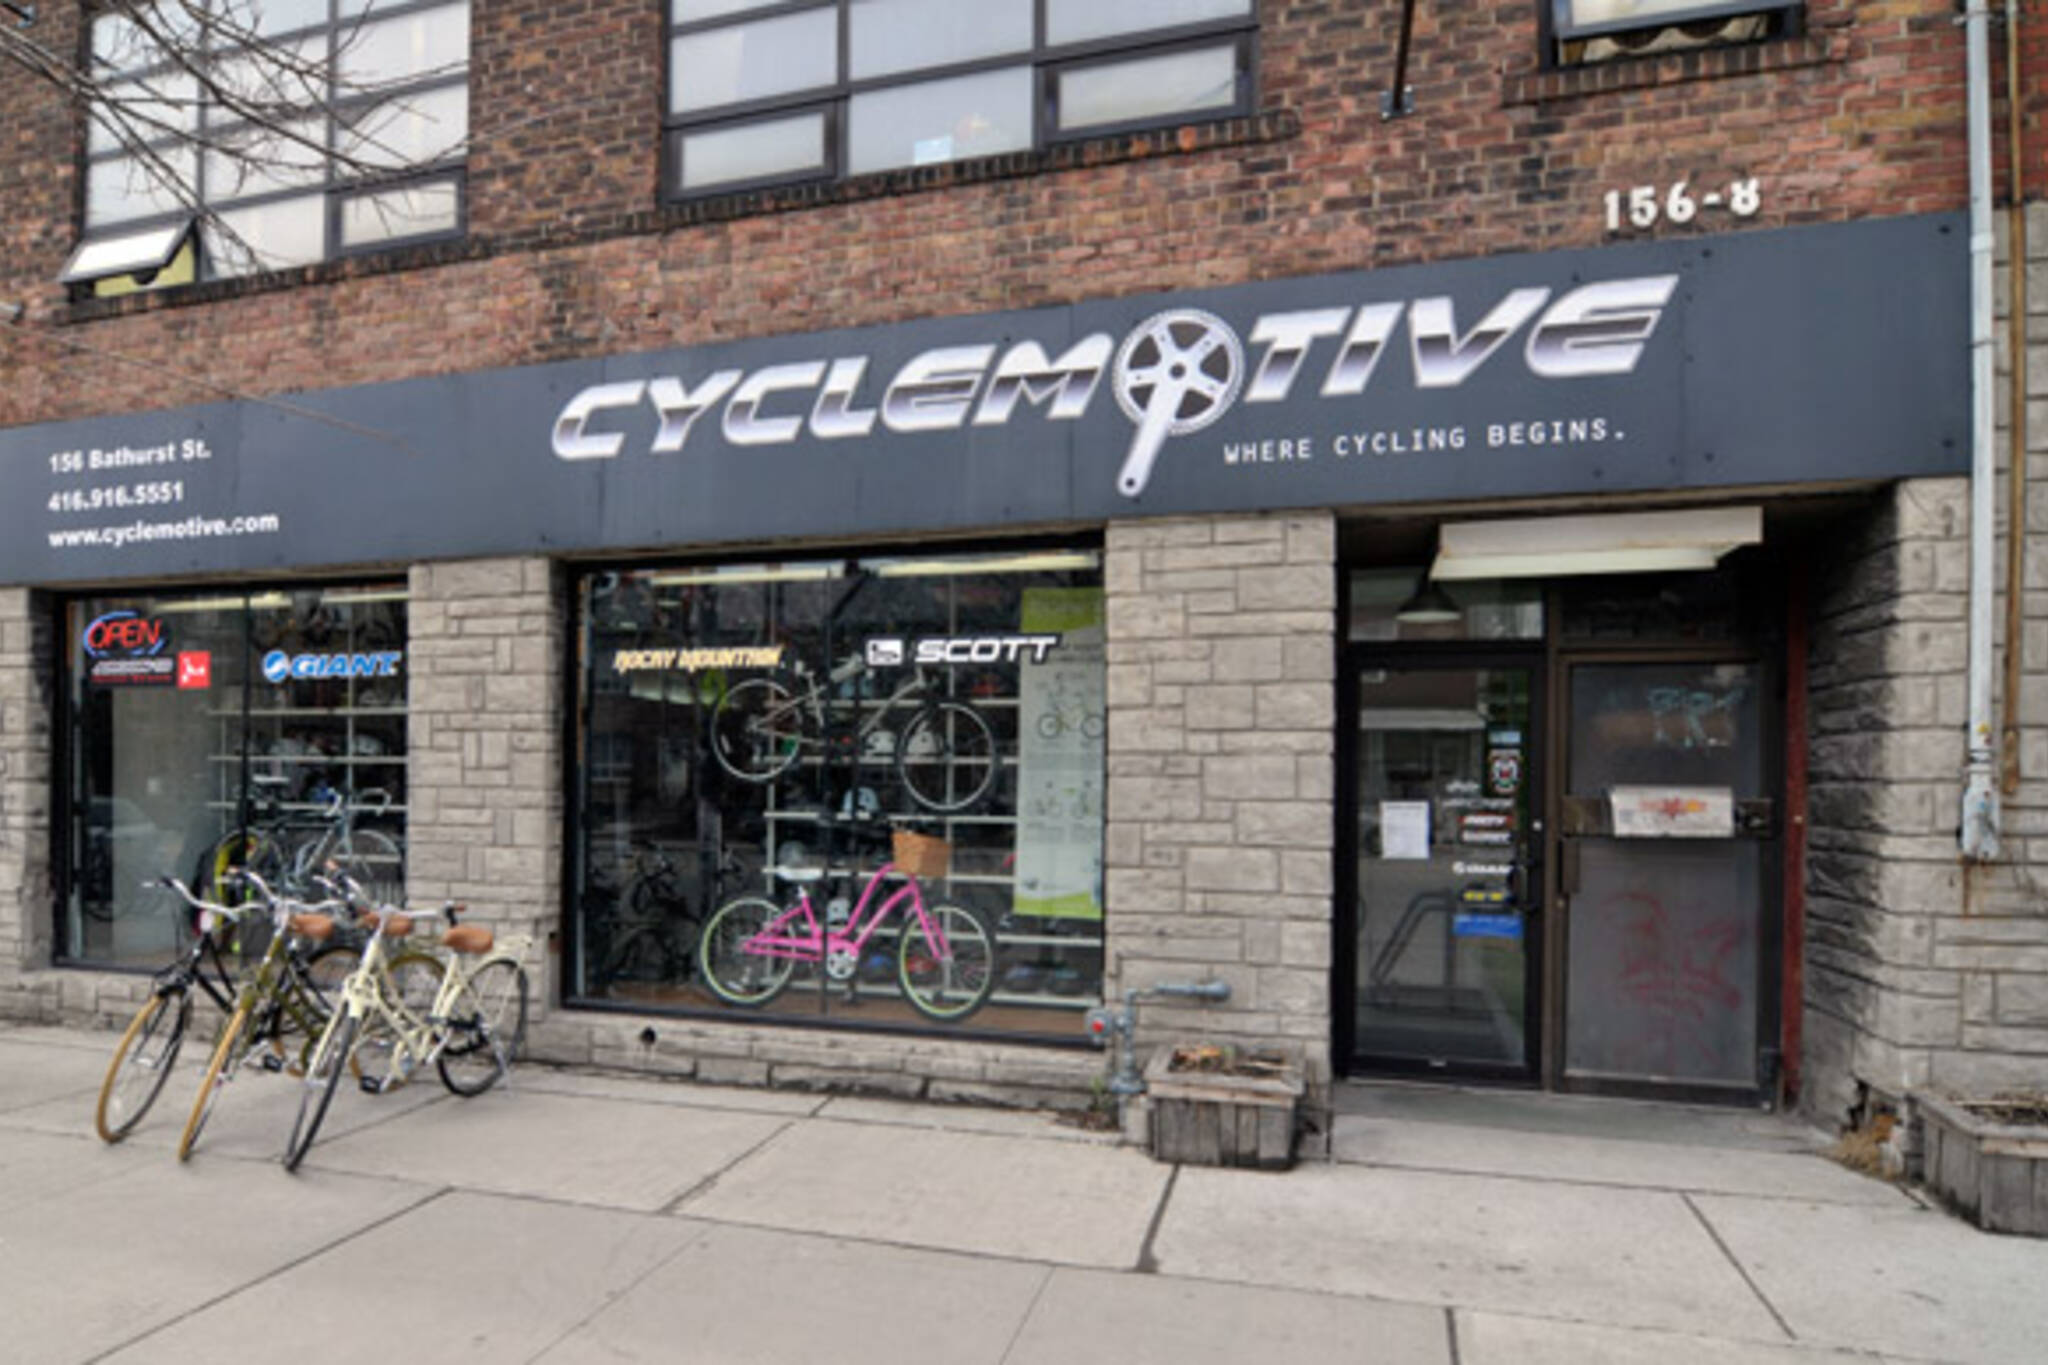 Cyclemotive Toronto